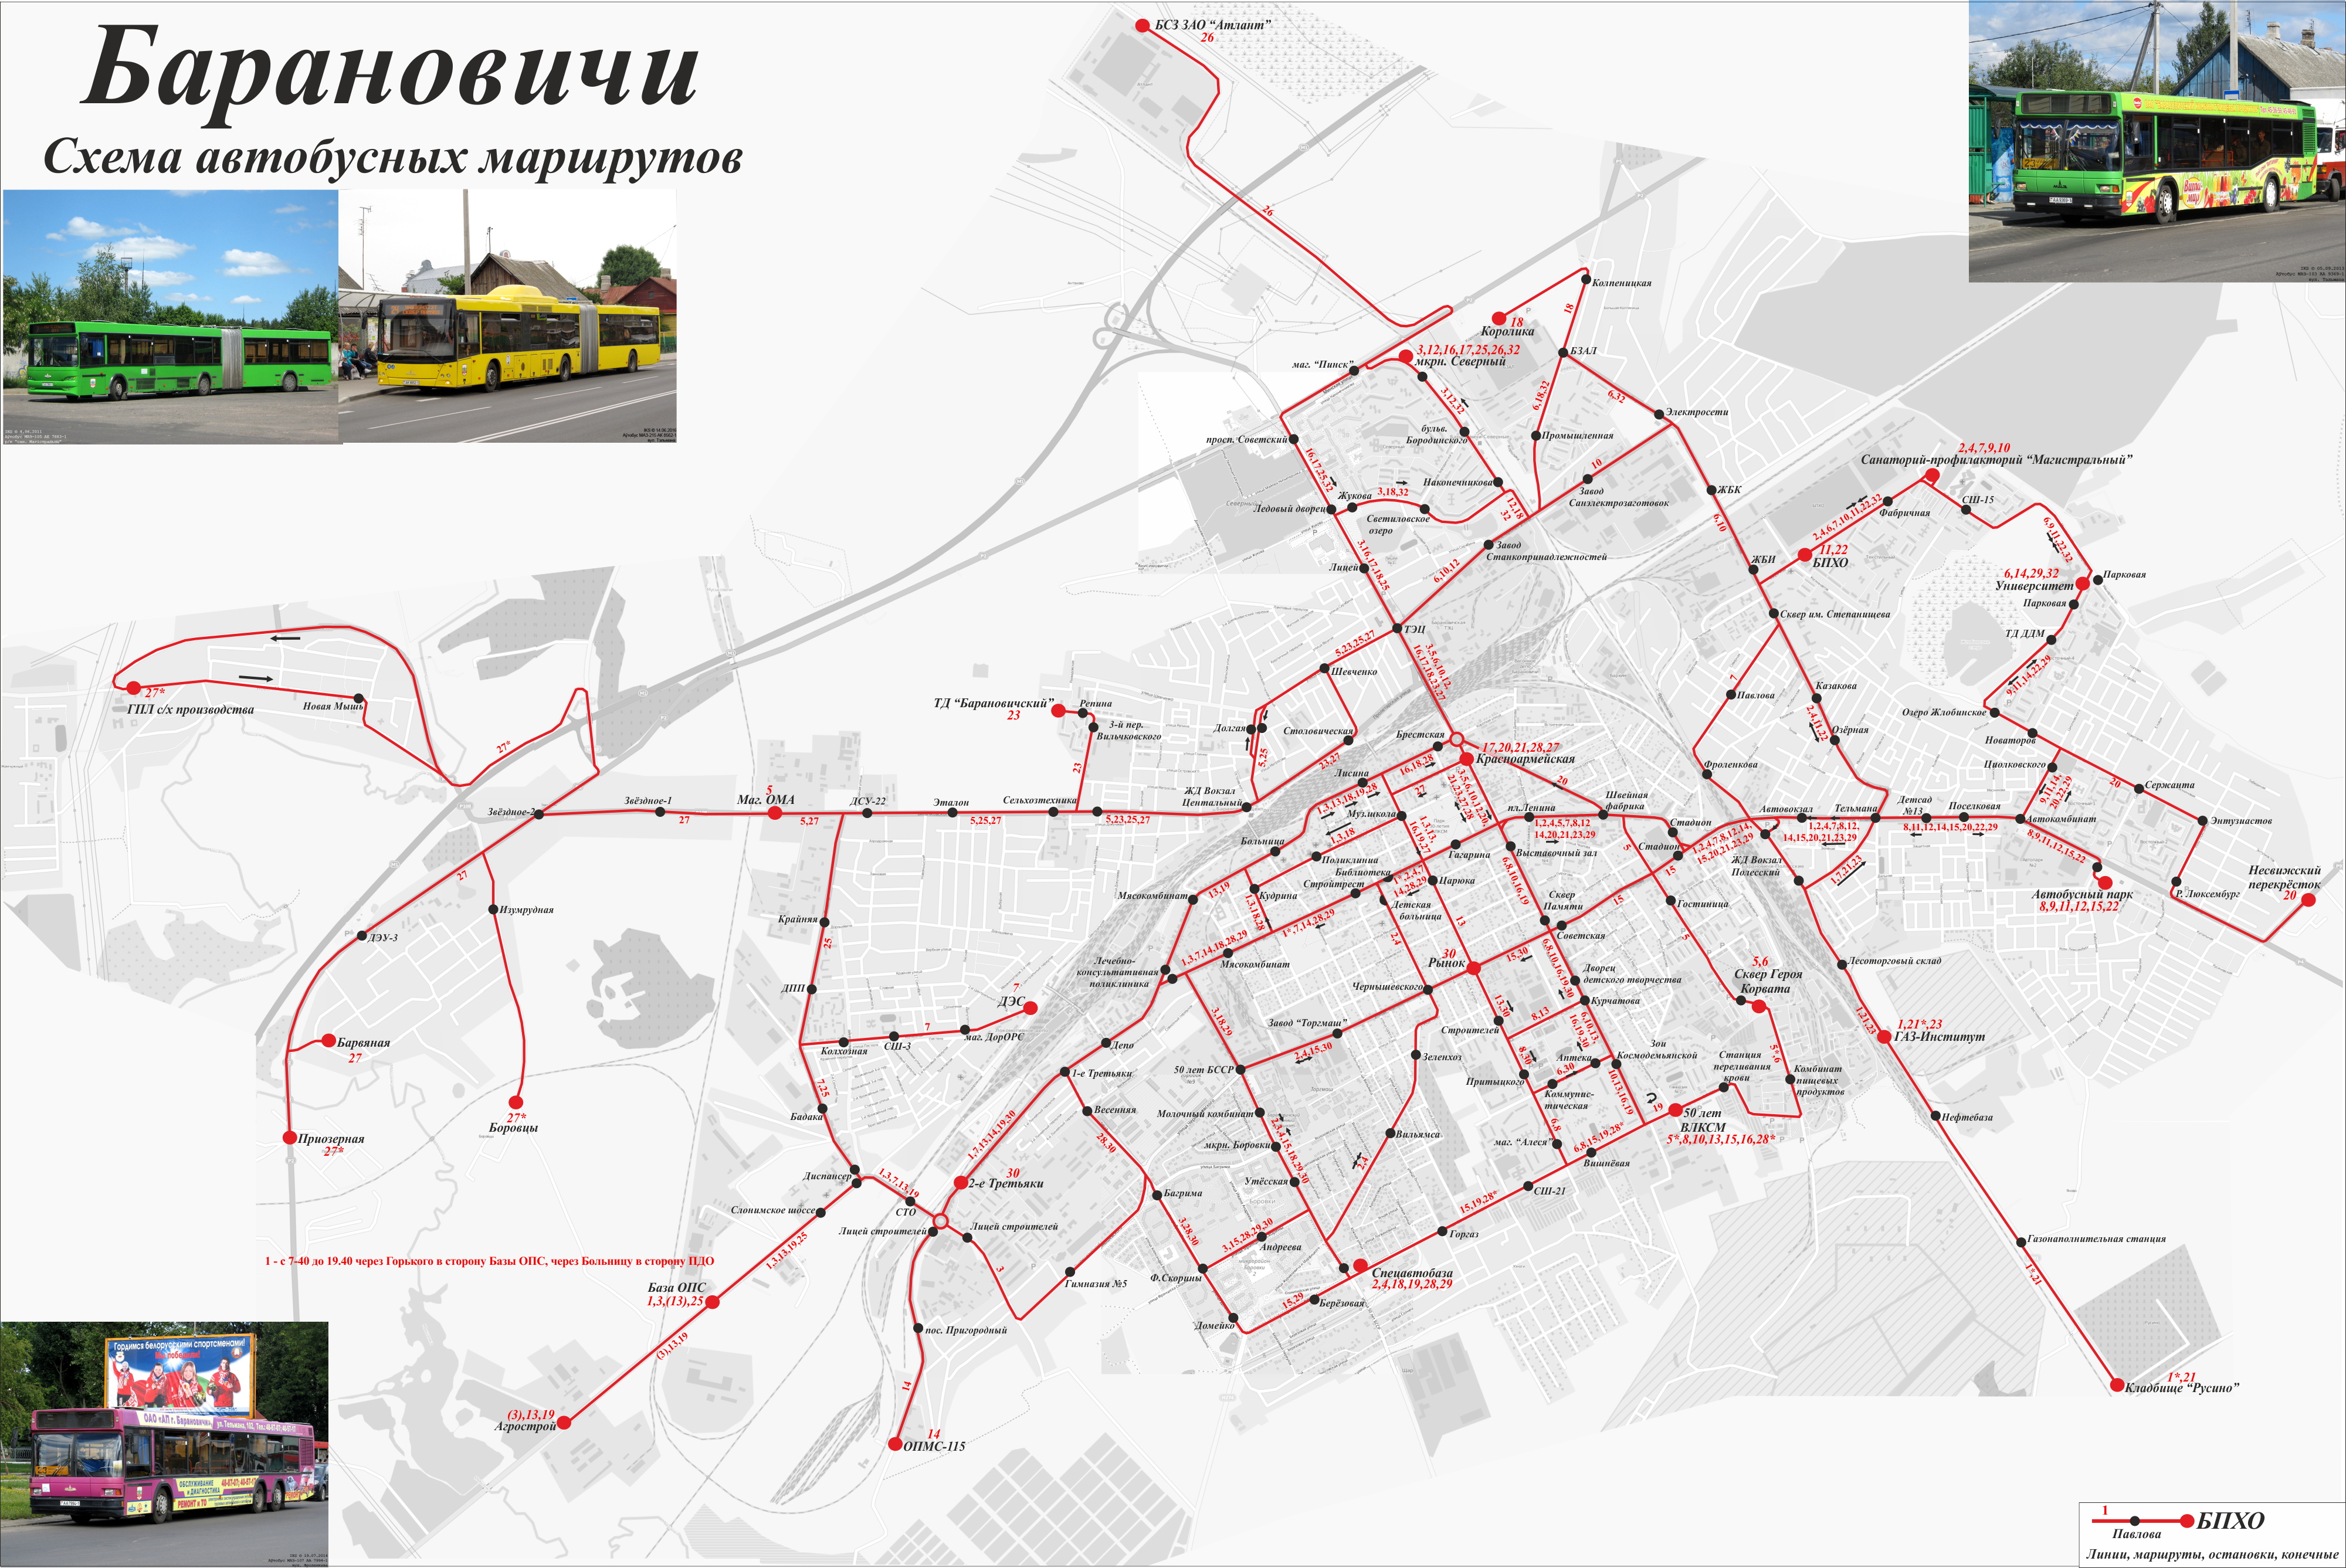 Baranovichi — Maps; Maps routes